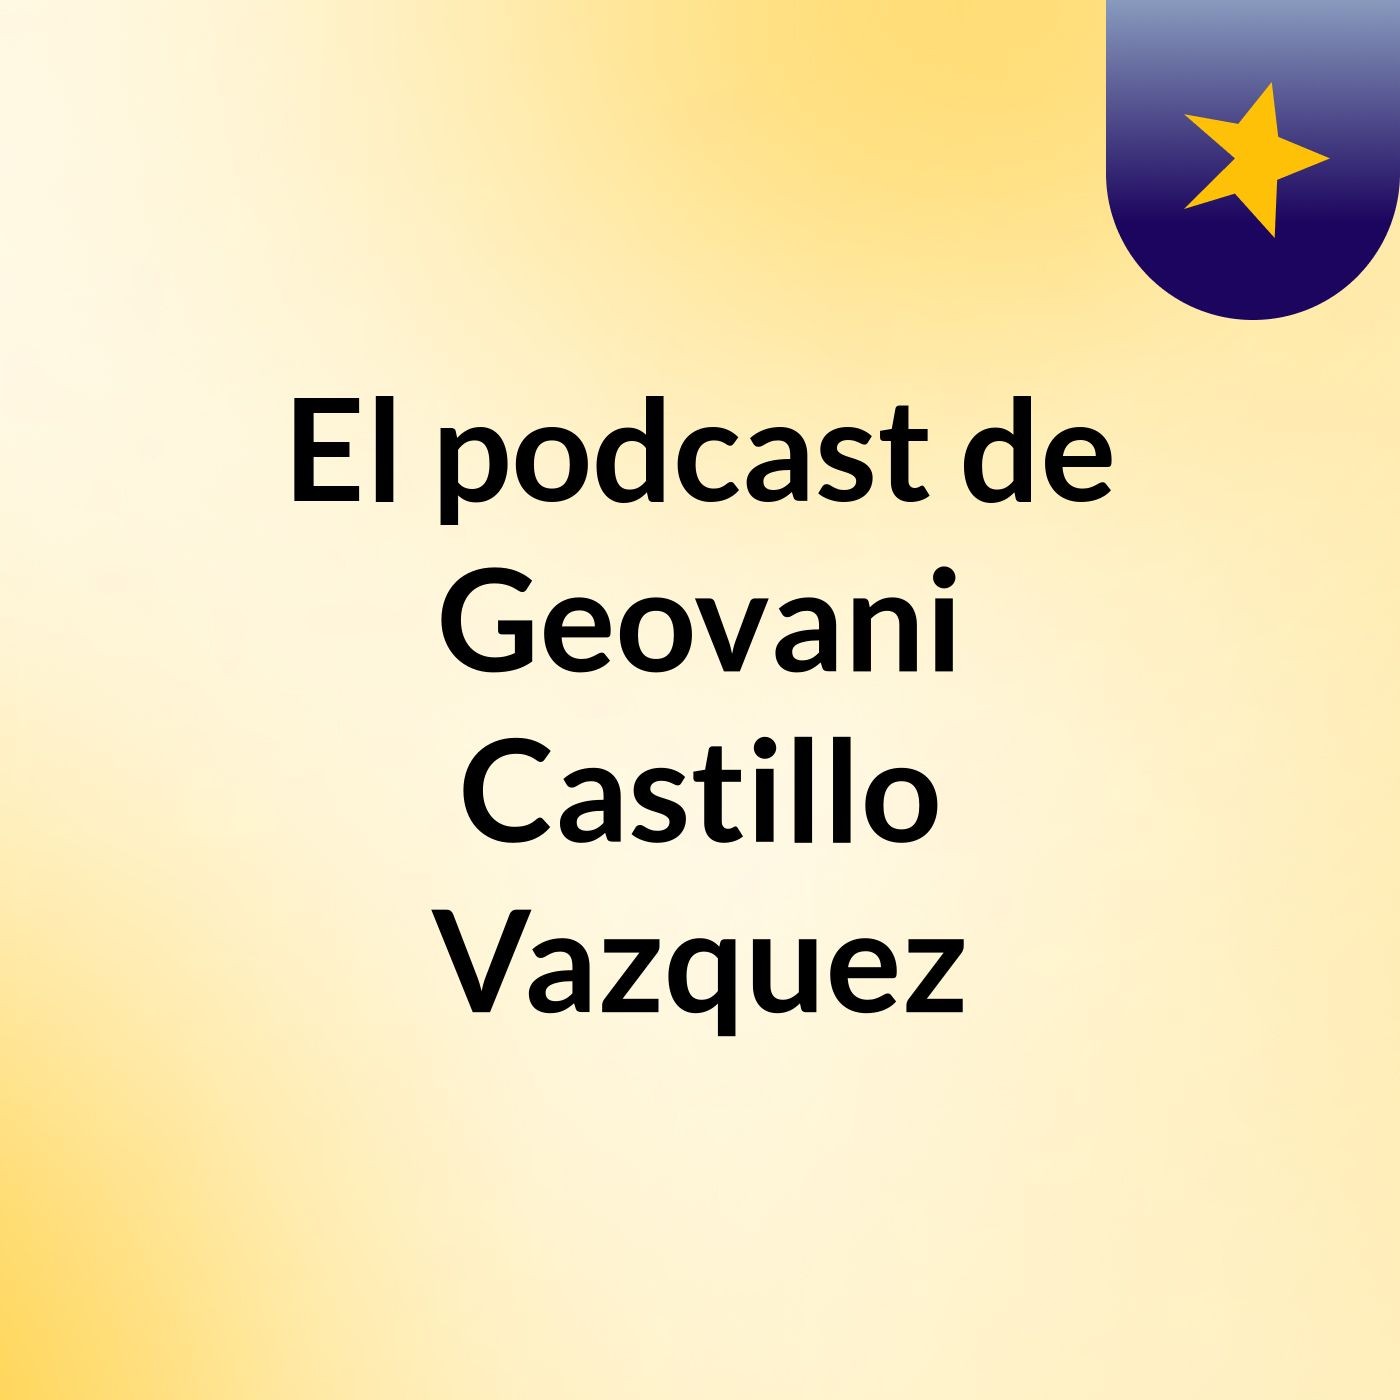 El podcast de Geovani Castillo Vazquez